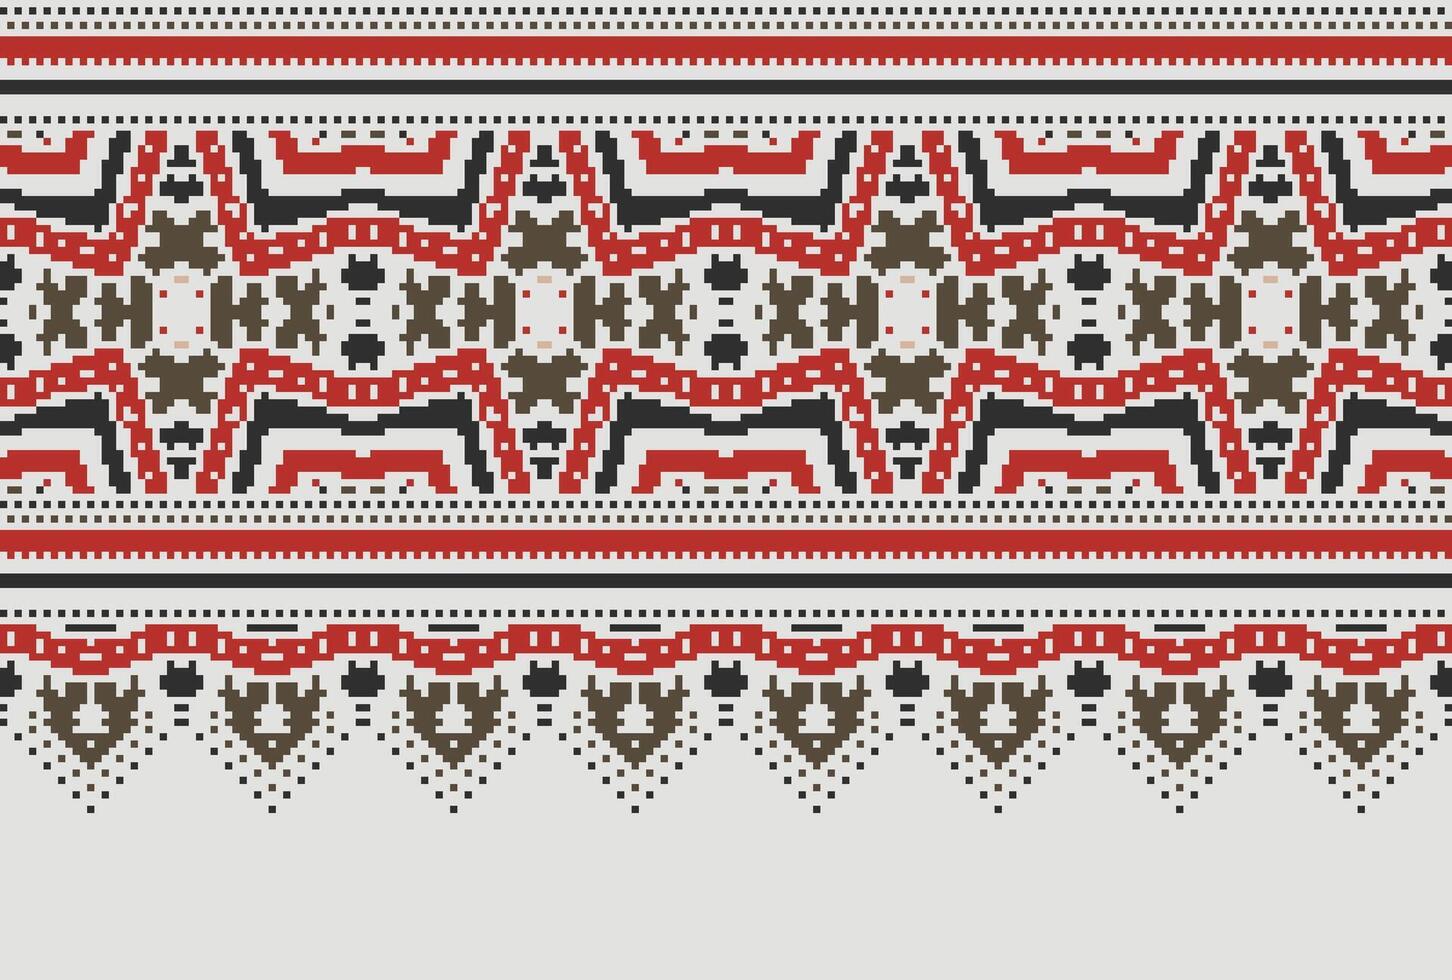 pixel korsa sy mönster med blommig mönster. traditionell korsa sy handarbete. geometrisk etnisk mönster, broderi, textil- ornament, tyg, hand sys mönster, kulturell söm vektor